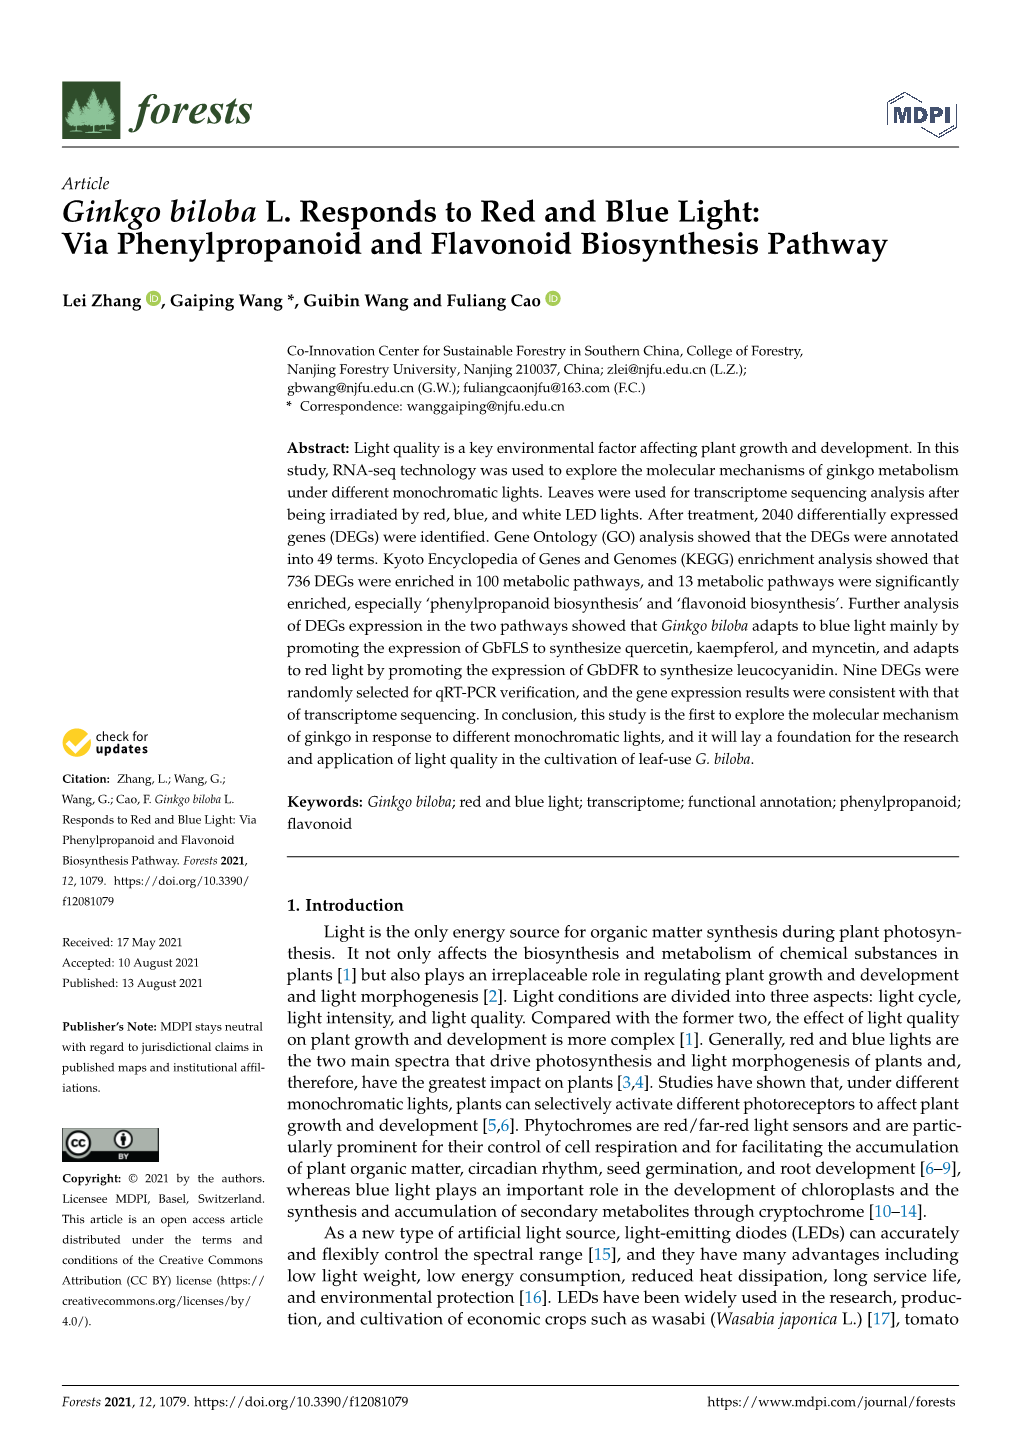 Via Phenylpropanoid and Flavonoid Biosynthesis Pathway